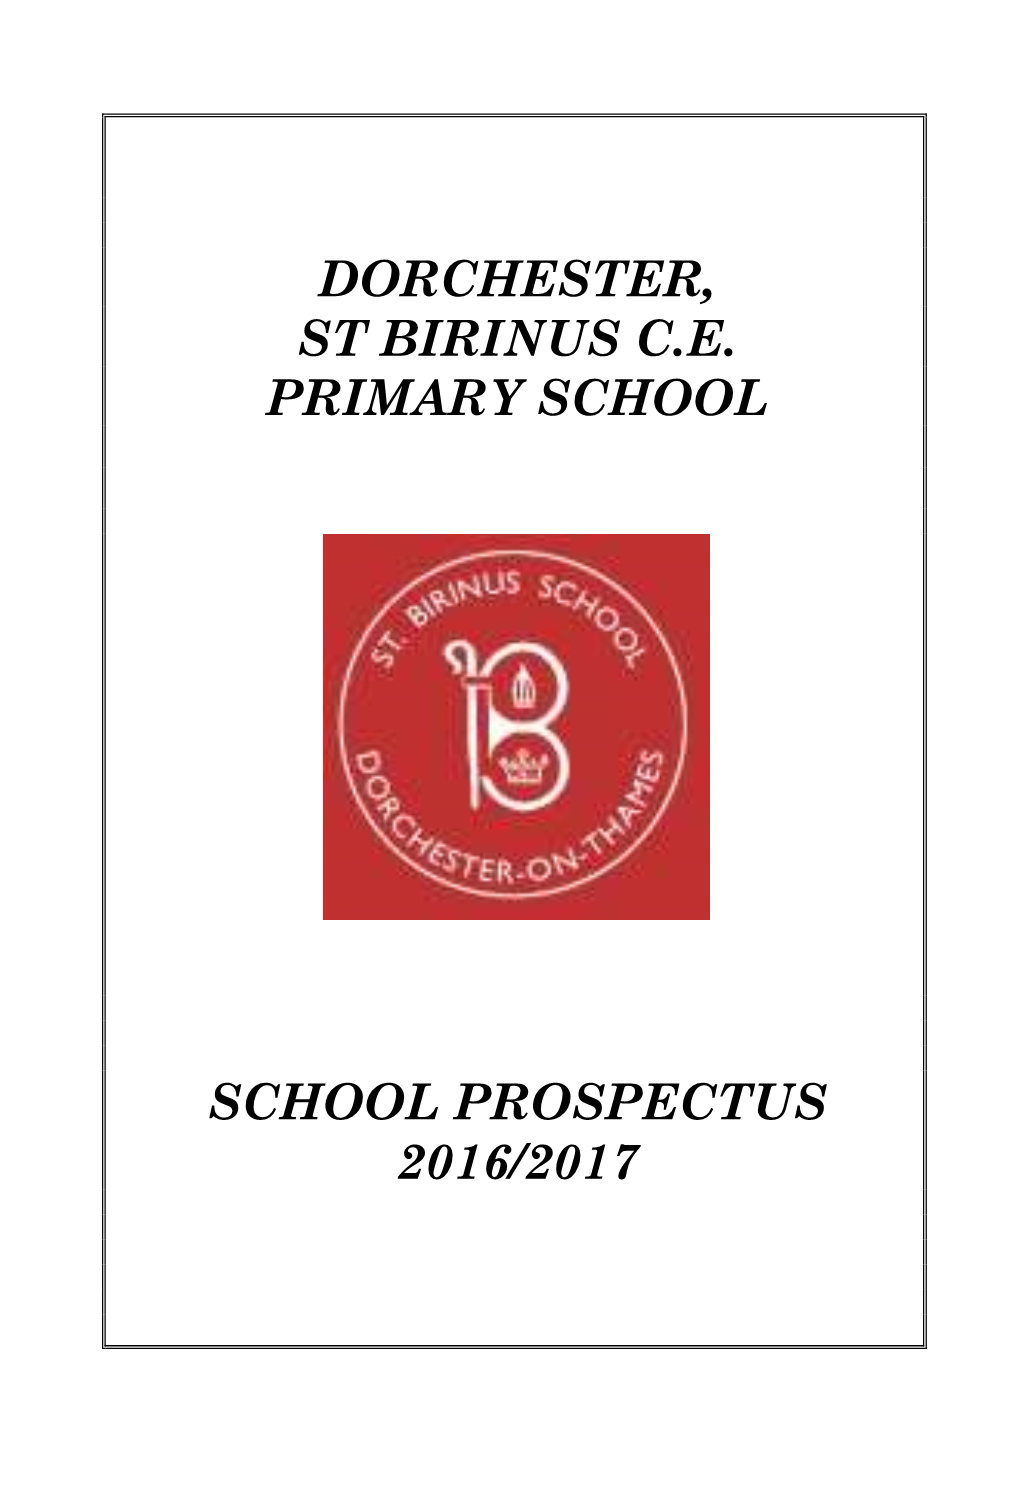 Dorchester, St Birinus C.E. Primary School School